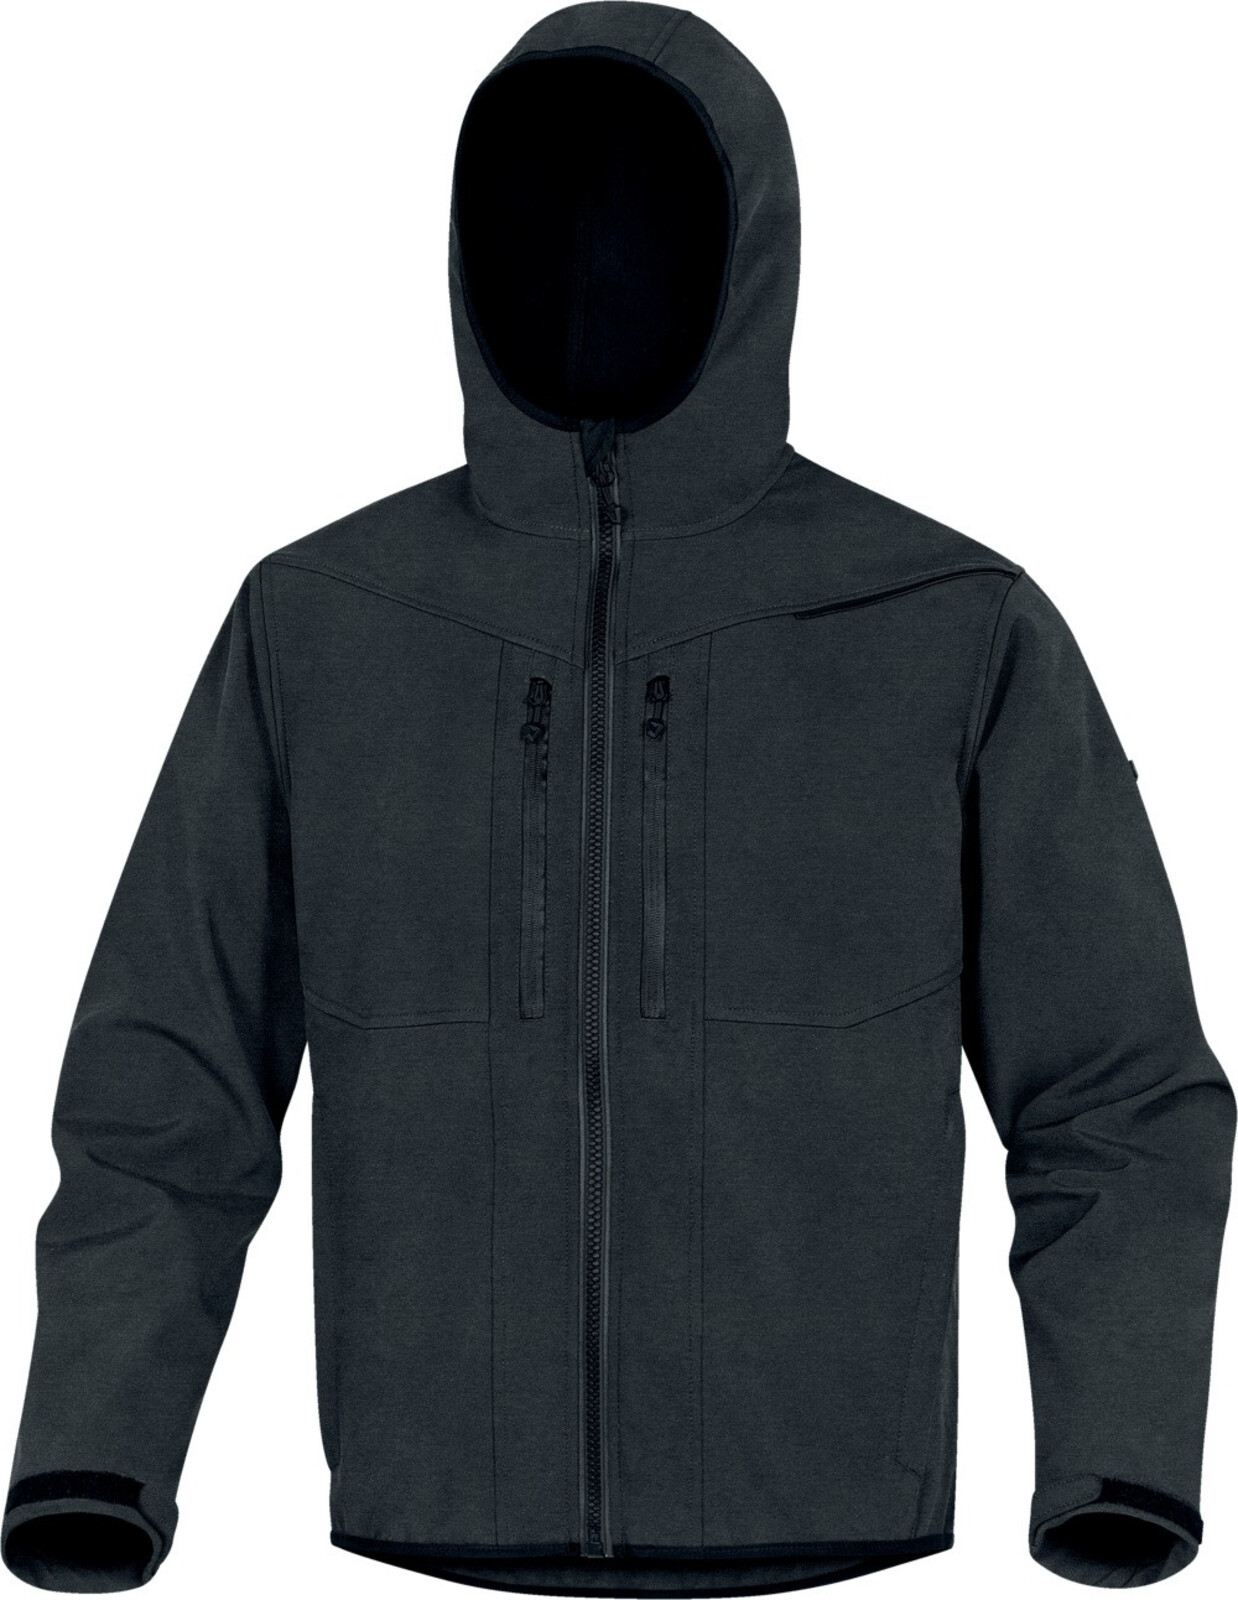 Softshellová bunda Delta Plus Horten2 - veľkosť: M, farba: čierna